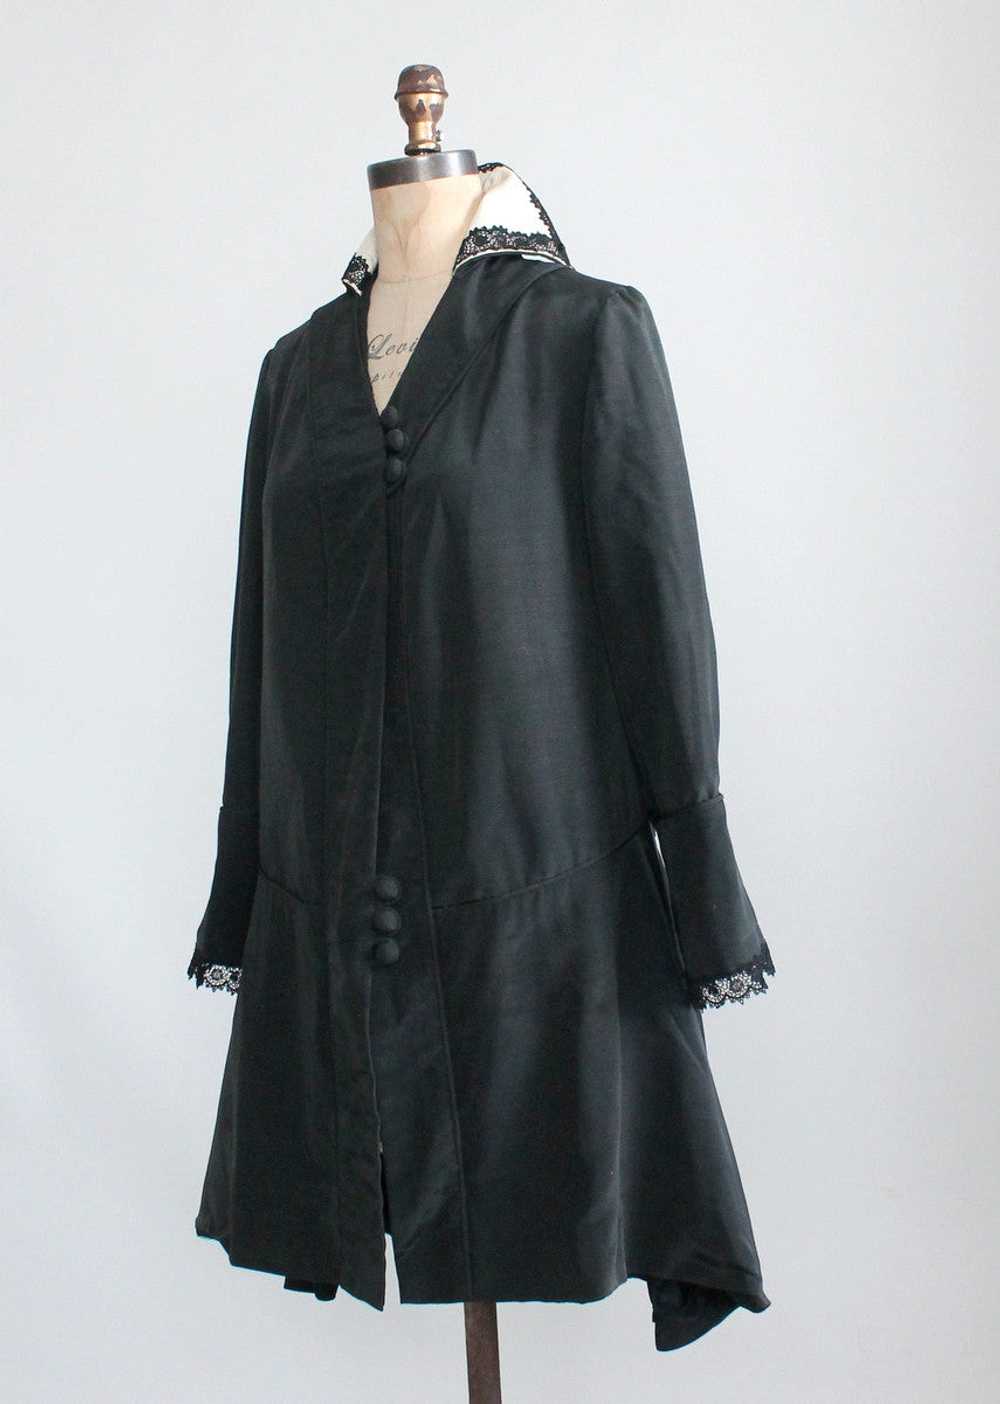 Antique Edwardian Black Silk Coat with Stand Up C… - image 5